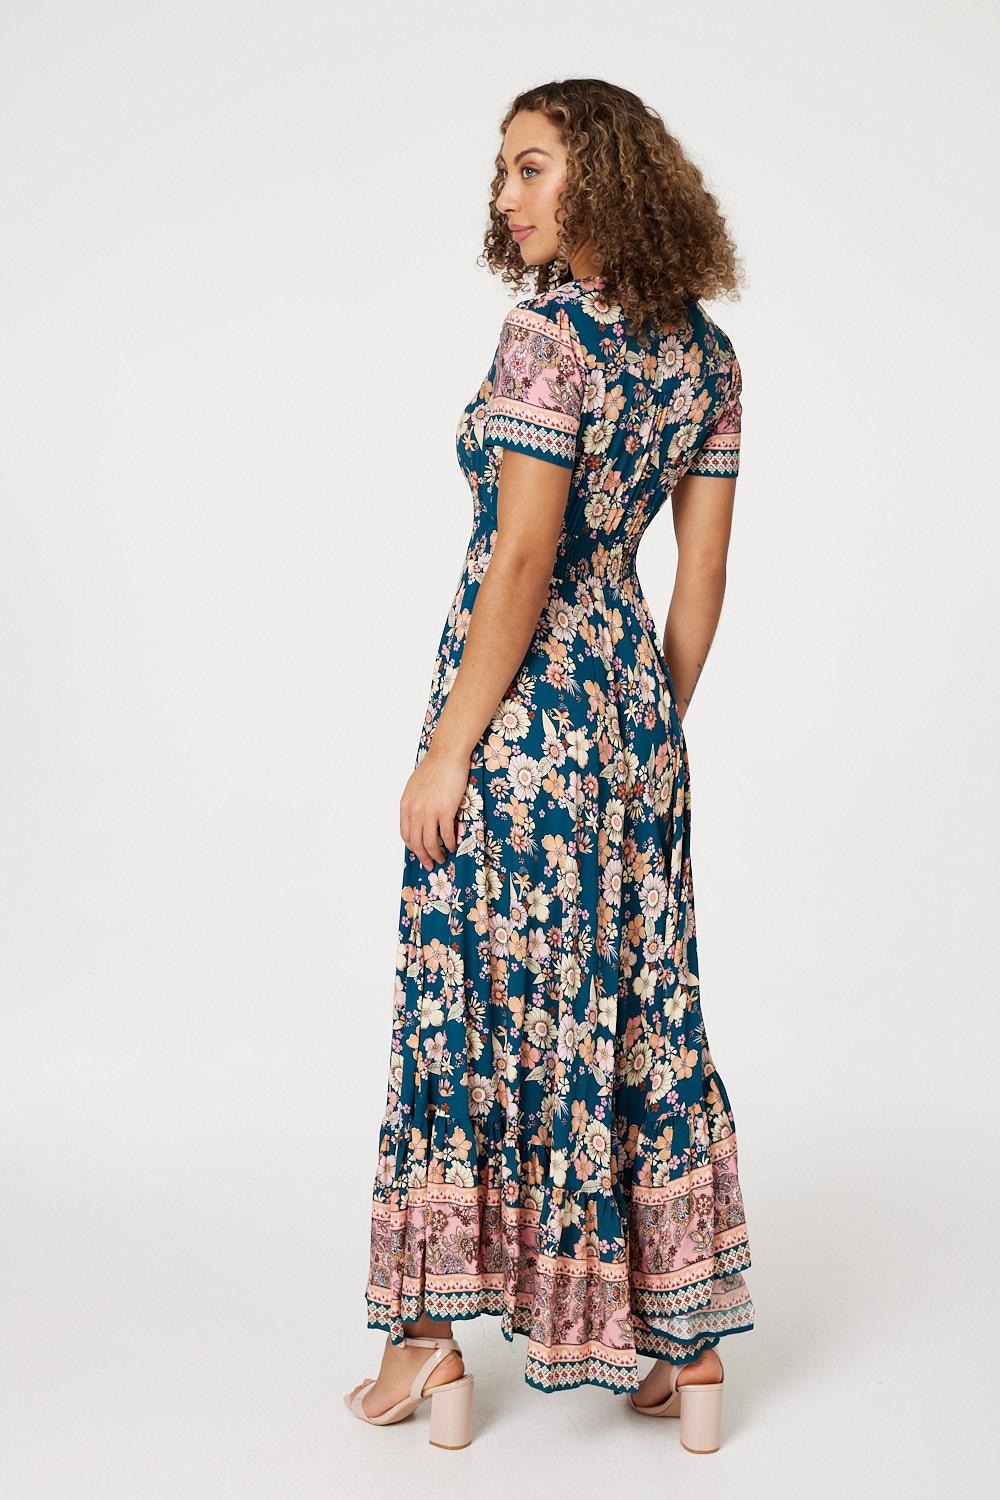 Teal | Floral Drawstring Maxi Dress